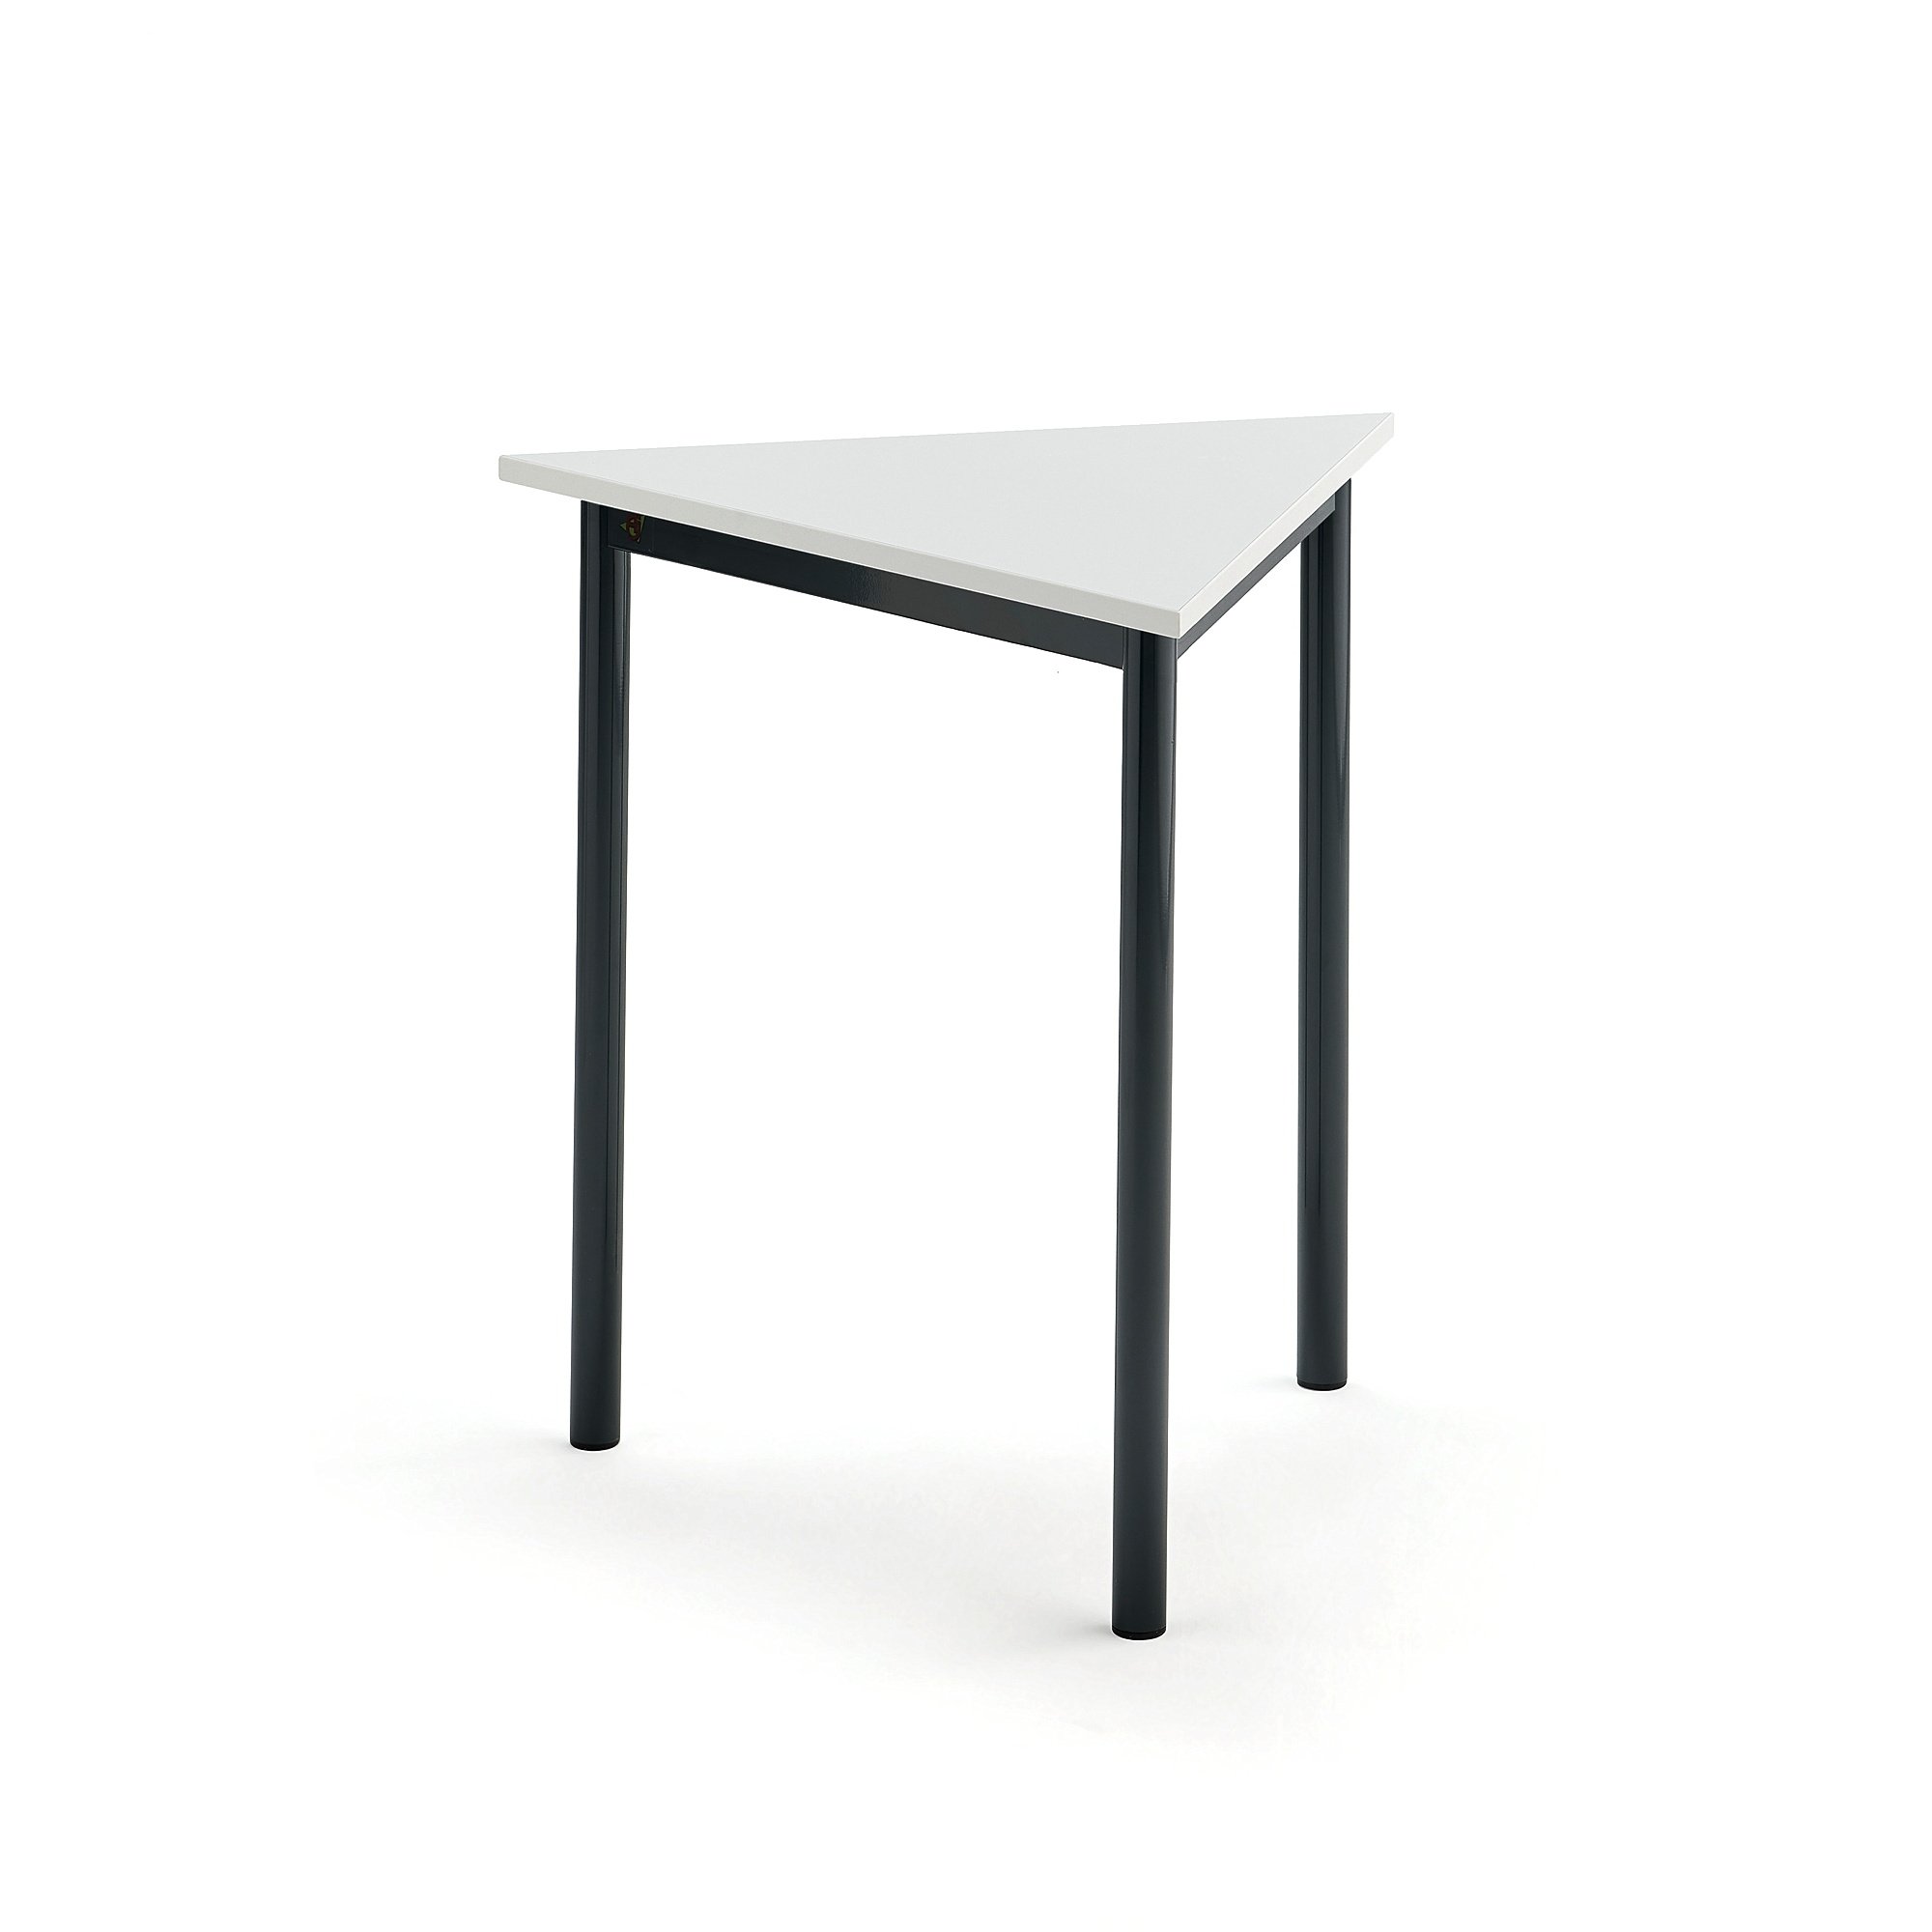 Stůl BORÅS TRIANGEL, 700x700x720 mm, antracitově šedé nohy, HPL deska, bílá